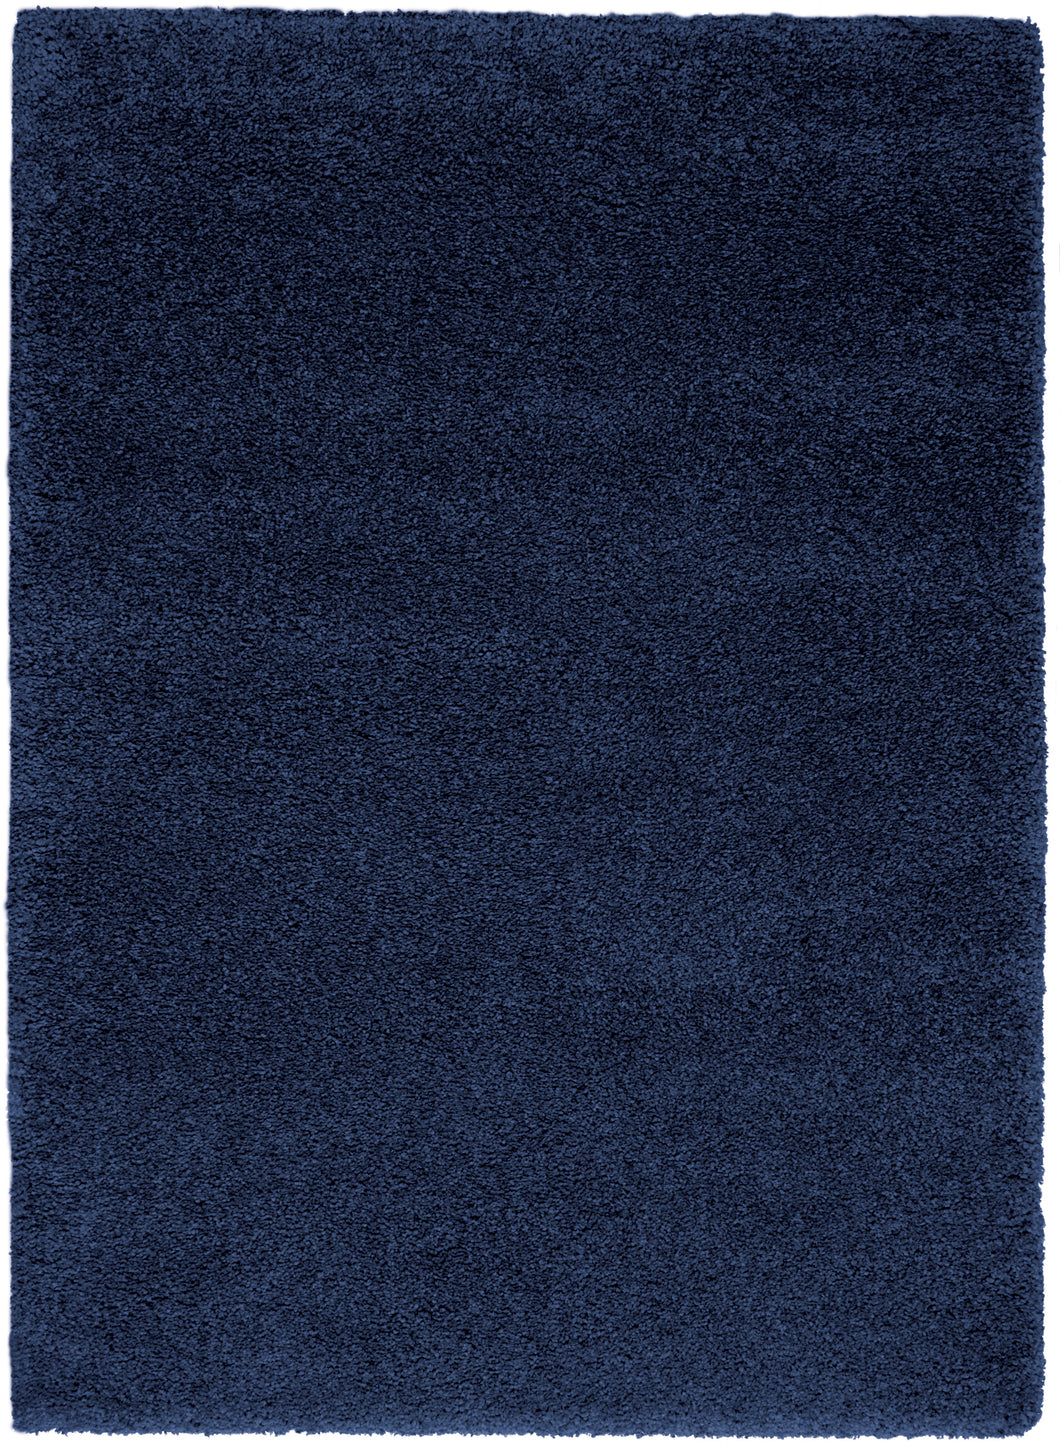 Nourison Malibu Shag MSG01 Dark Blue 5'x7' Area Rug MSG01 Navy